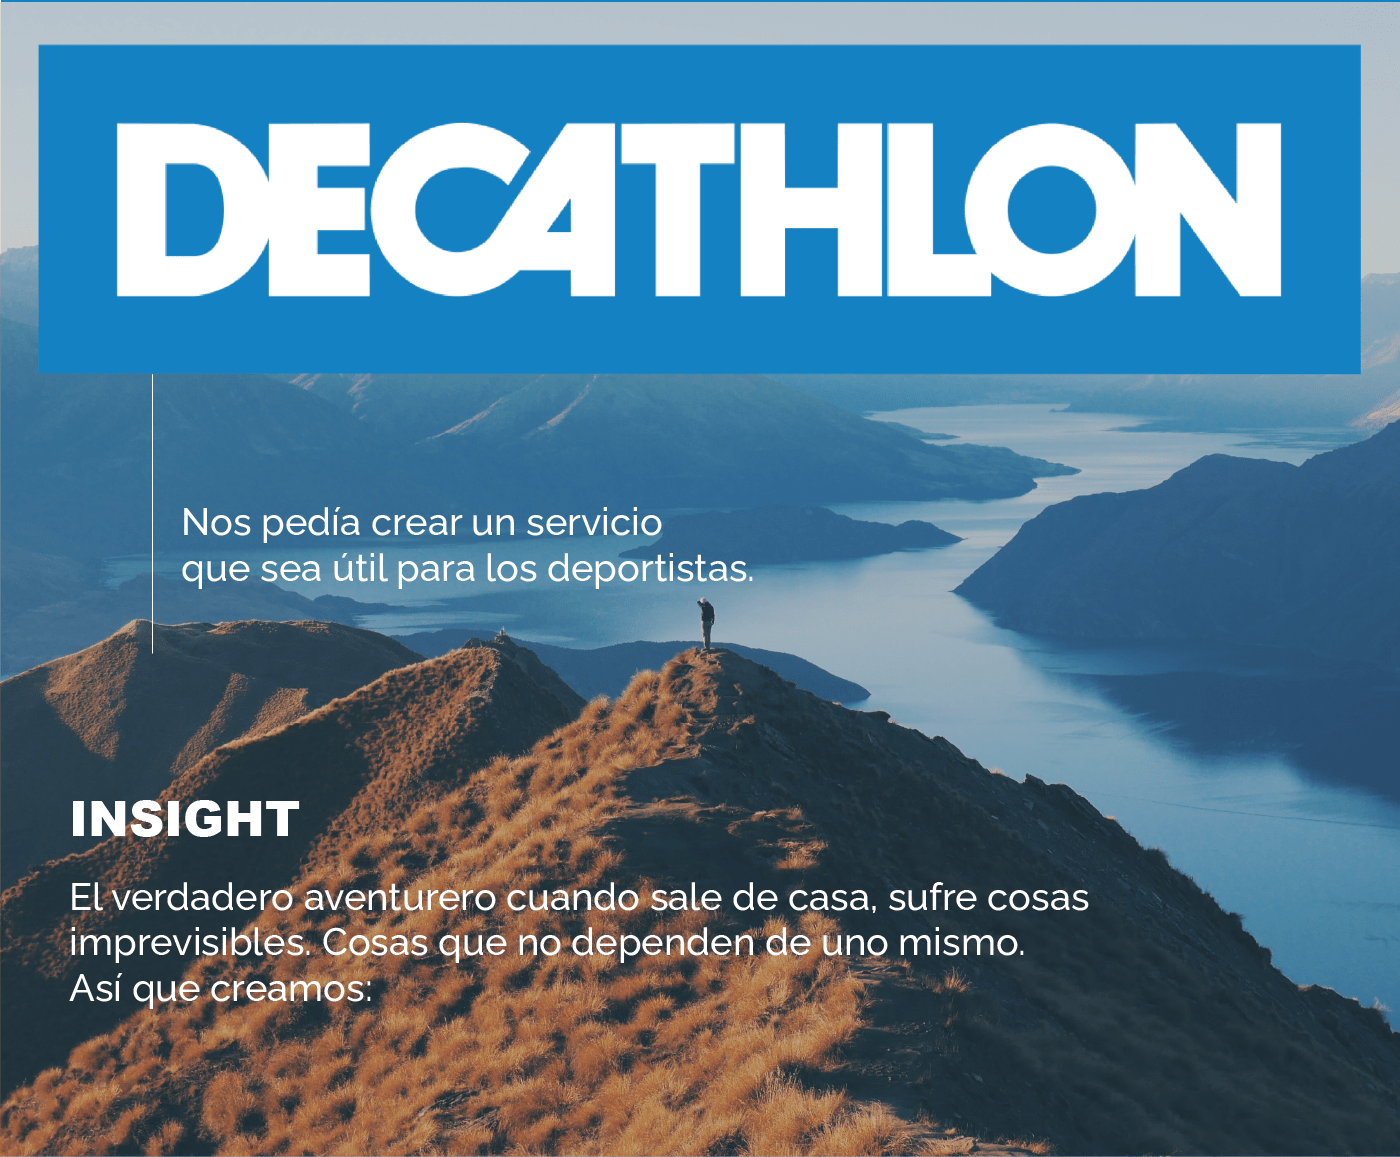 decathlon design photoshop service